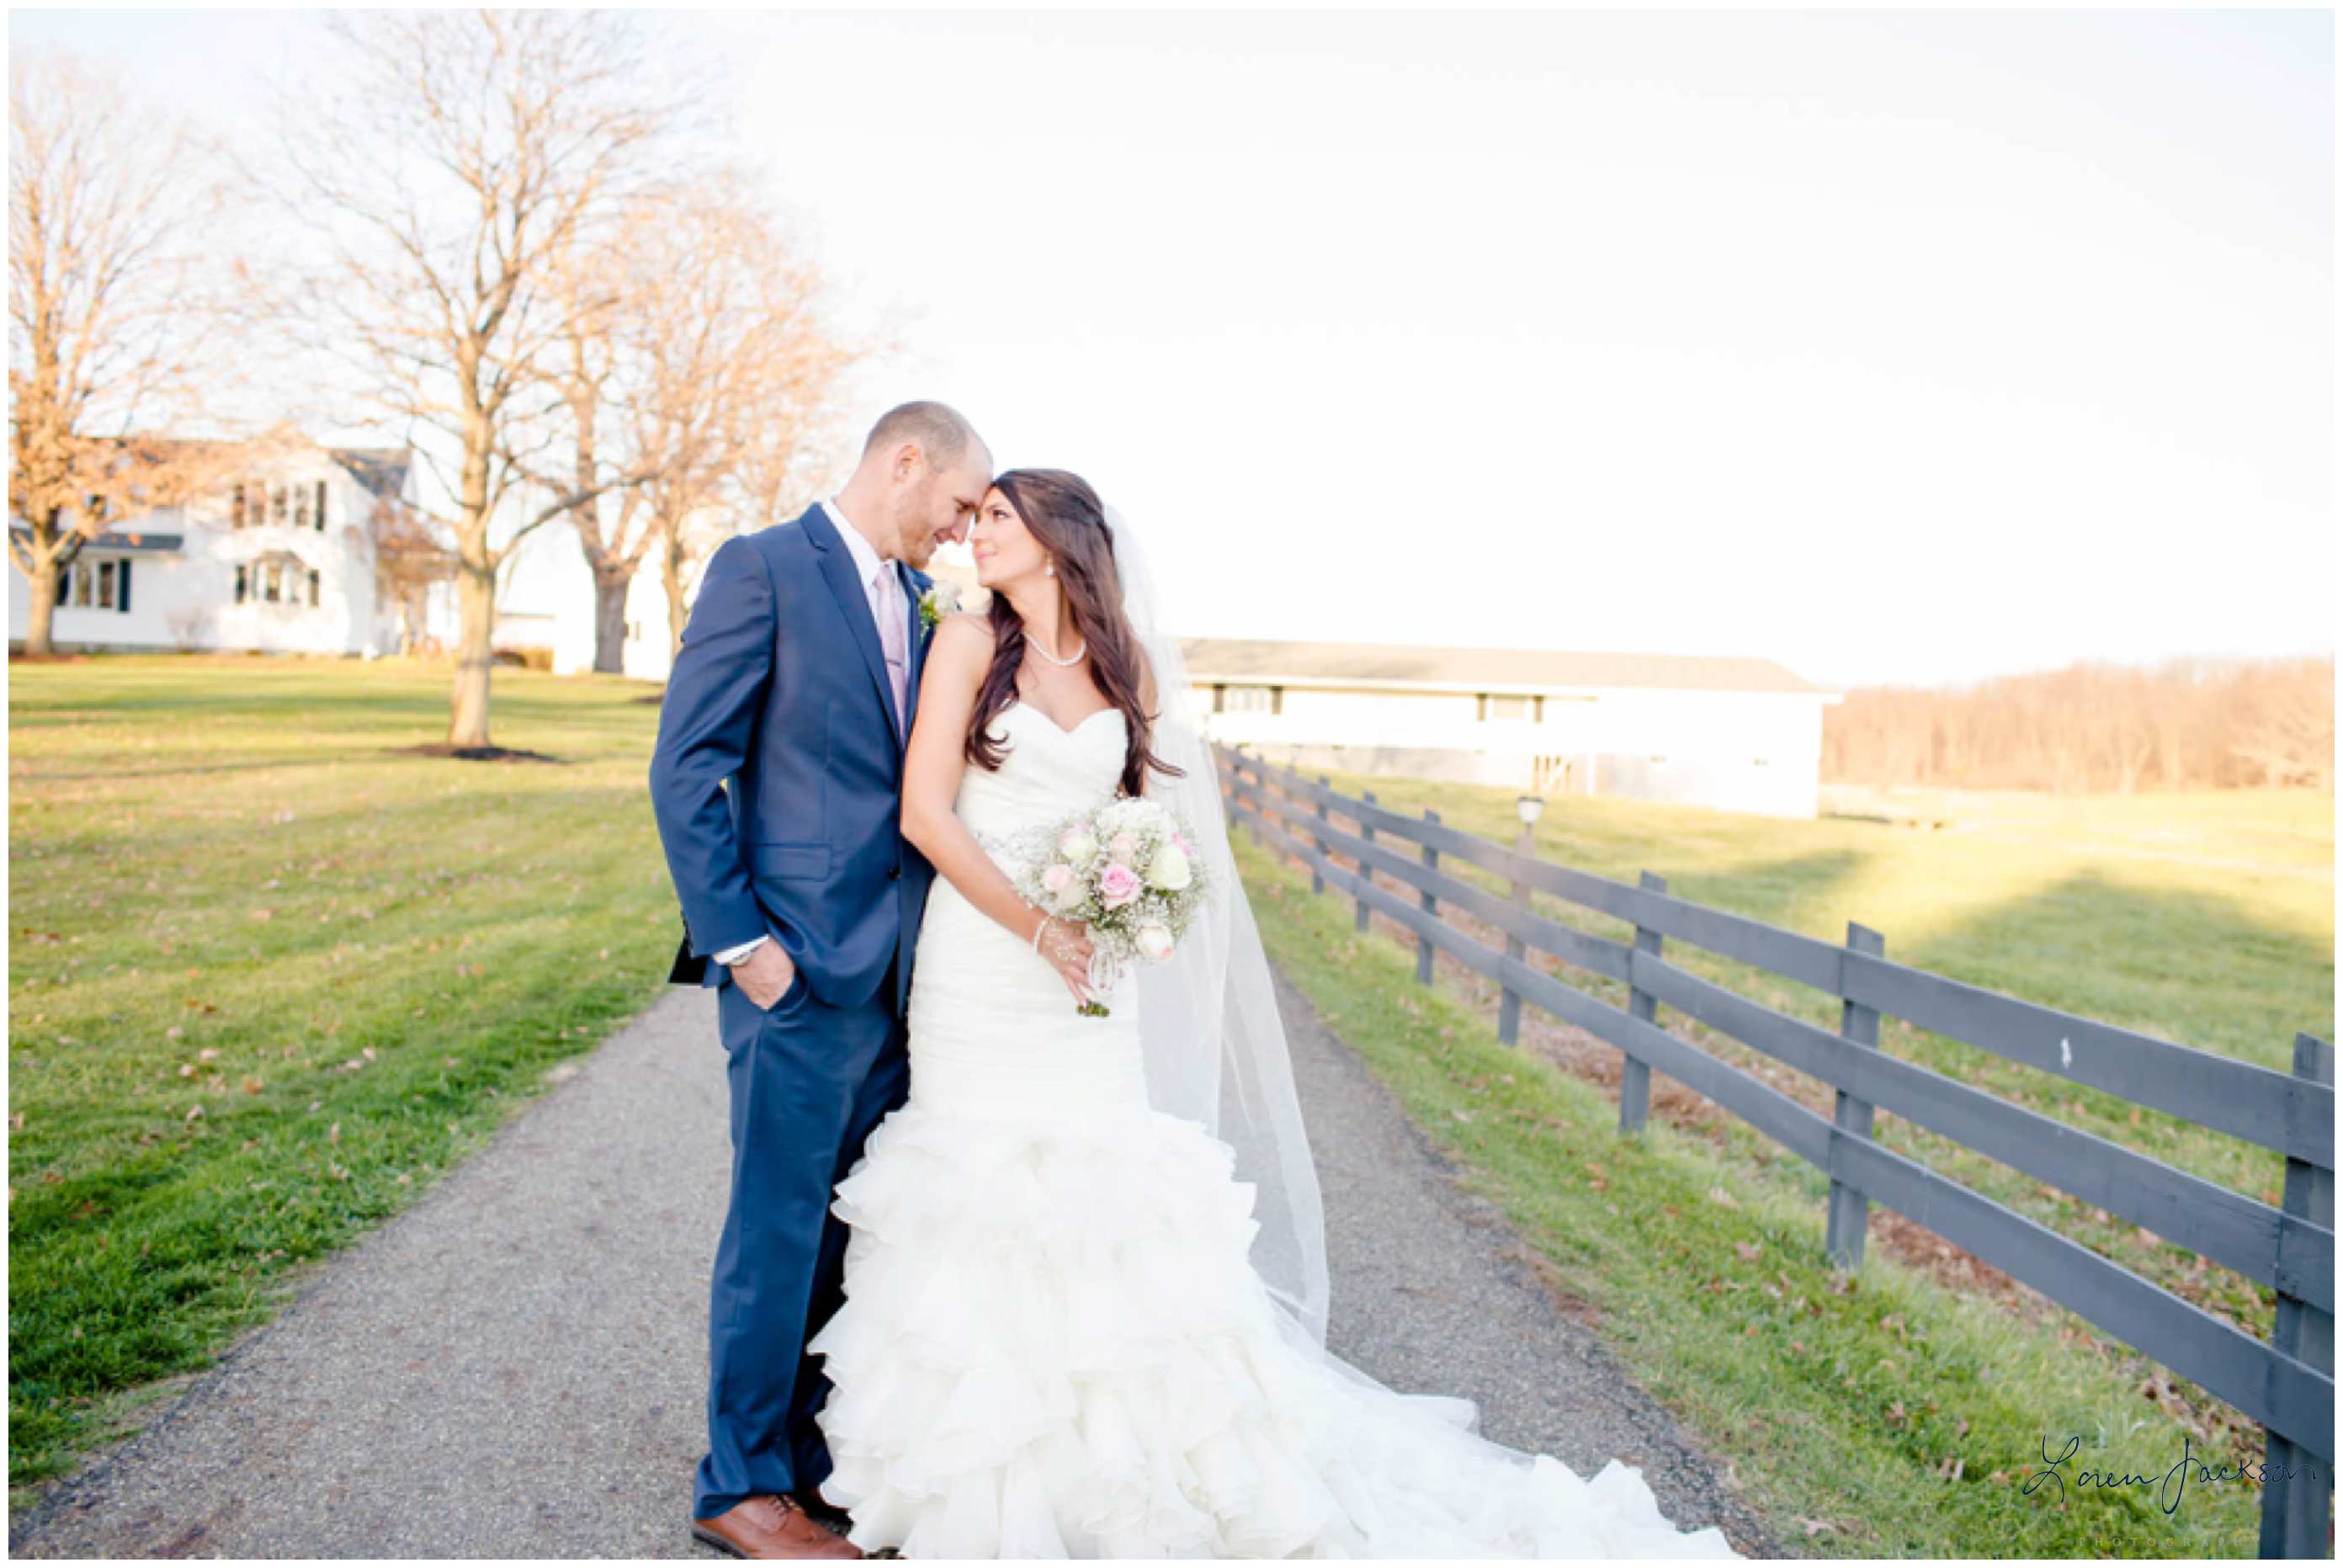 Loren-Jackson-Photography-brookside-farm-fall-wedding-75.jpg